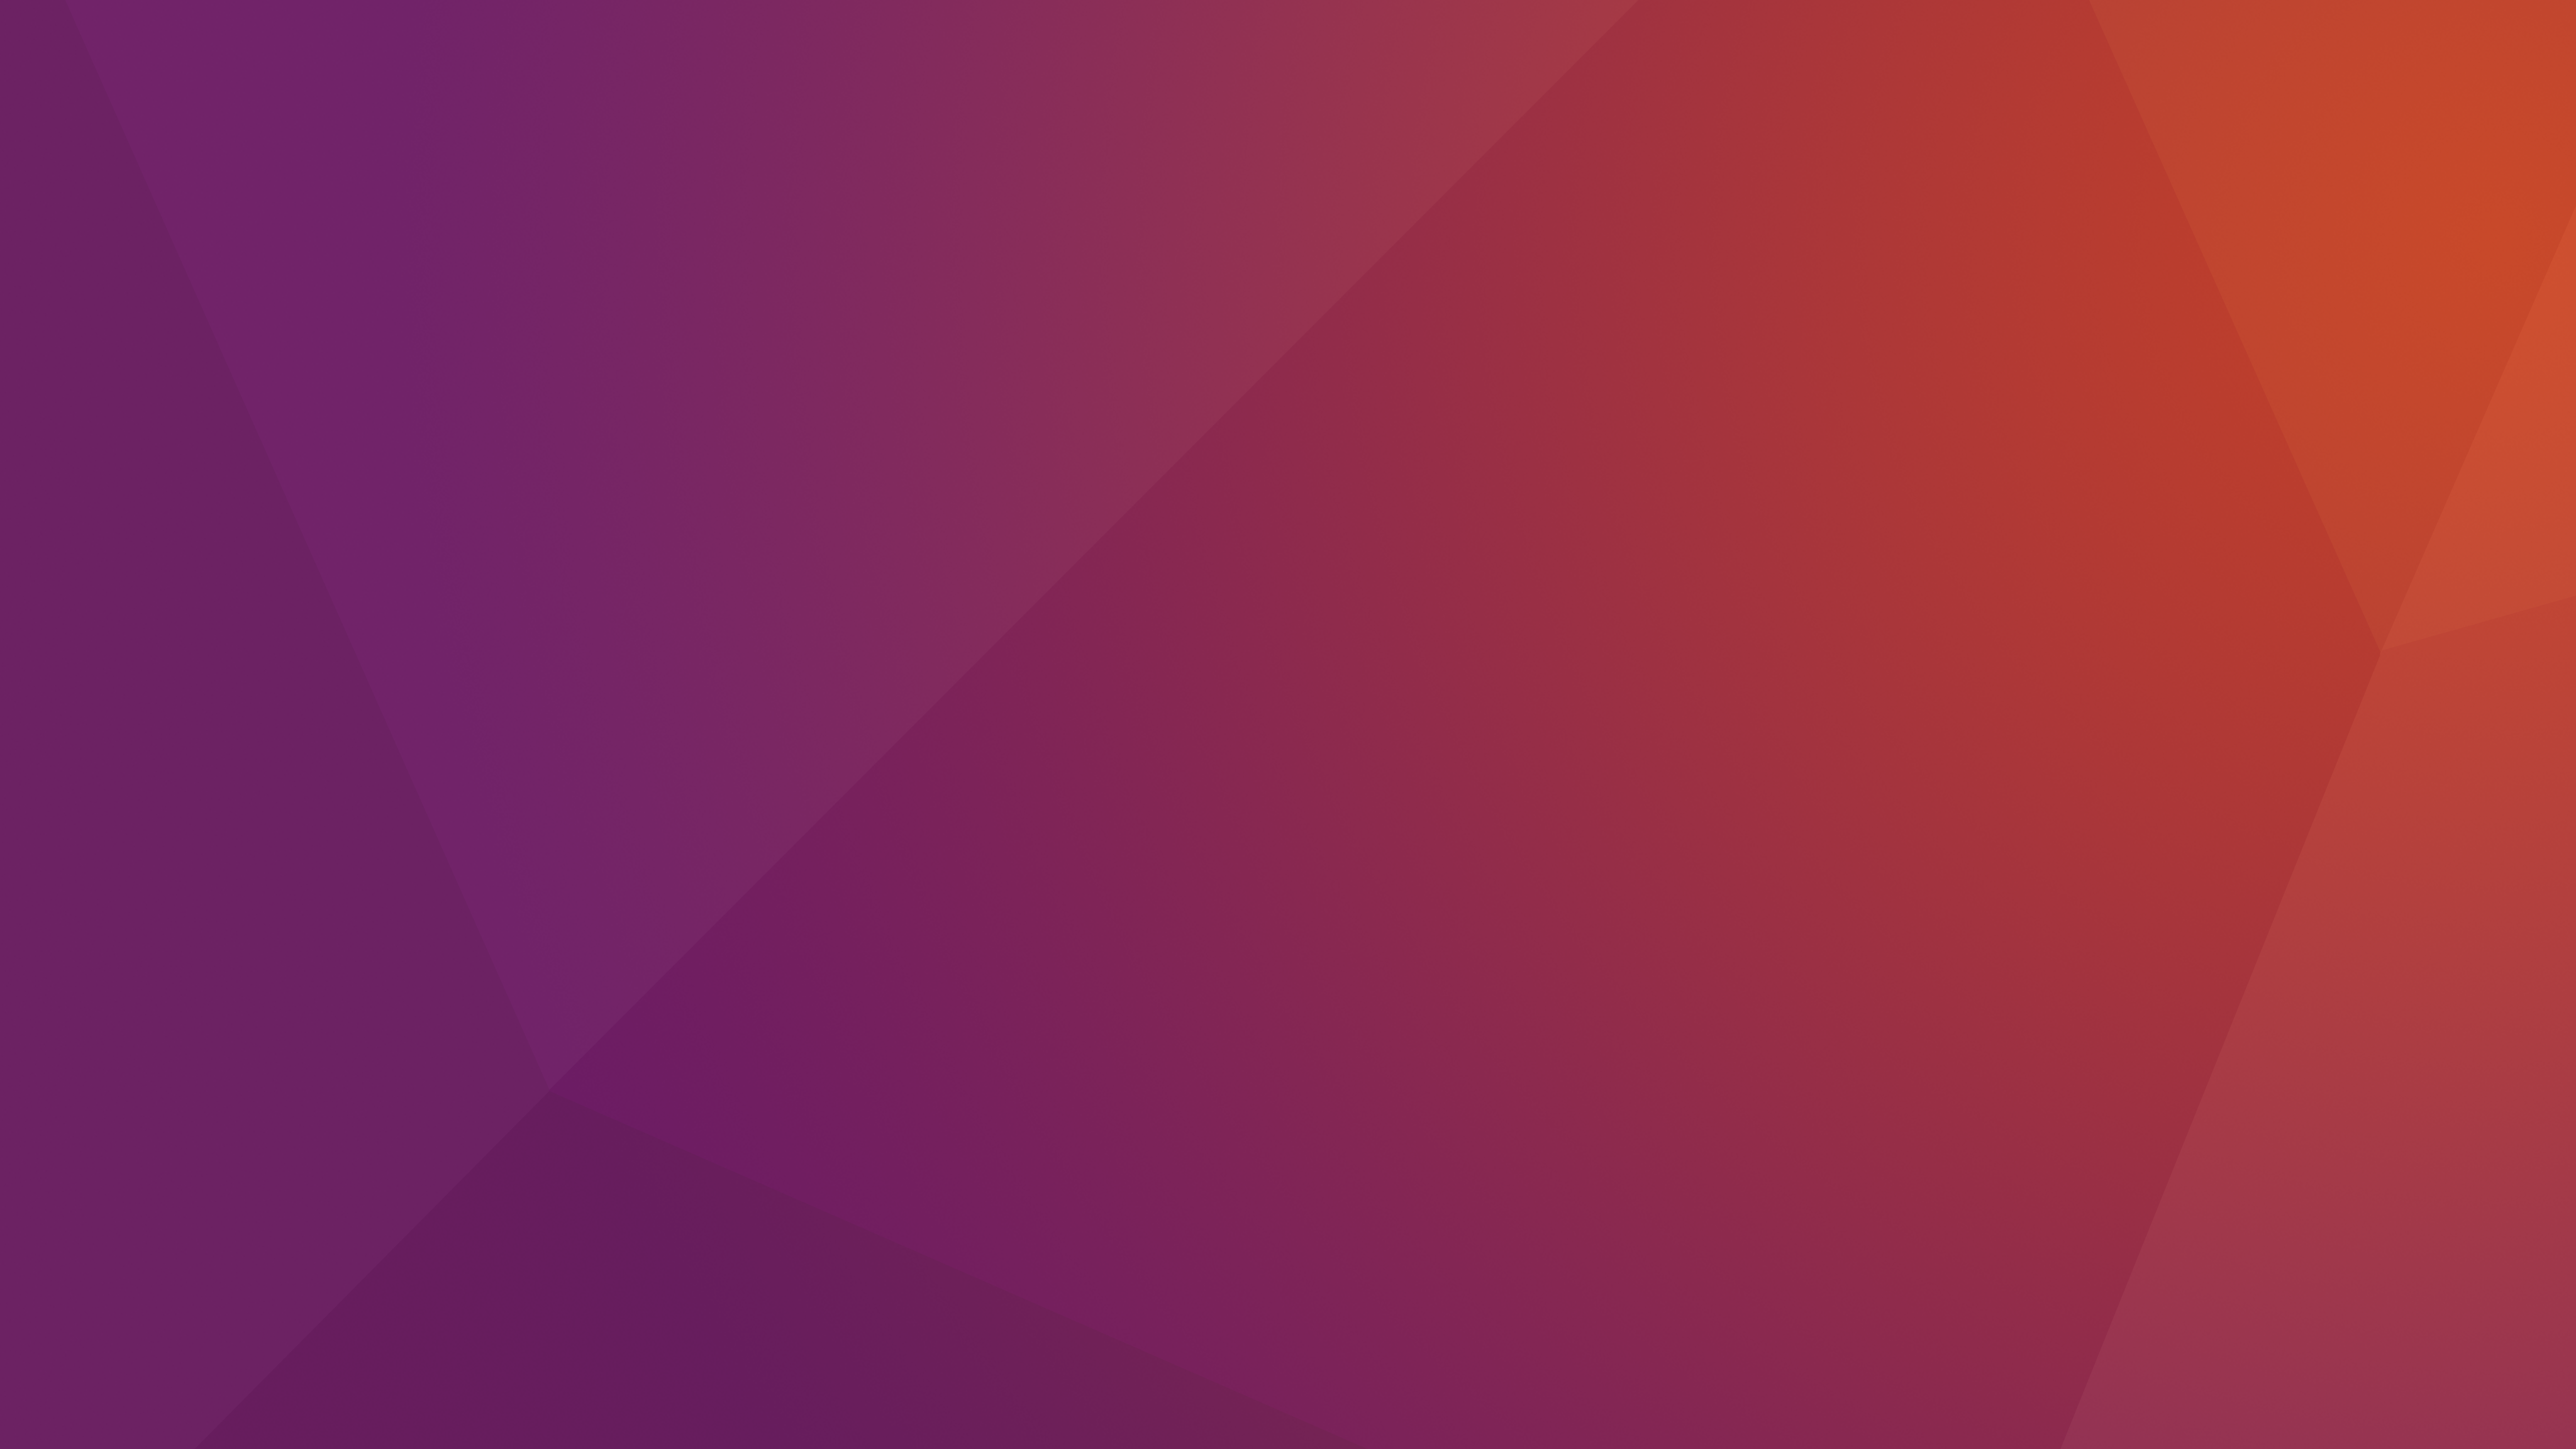 General 4096x2304 Ubuntu computer operating system abstract minimalism texture gradient digital art